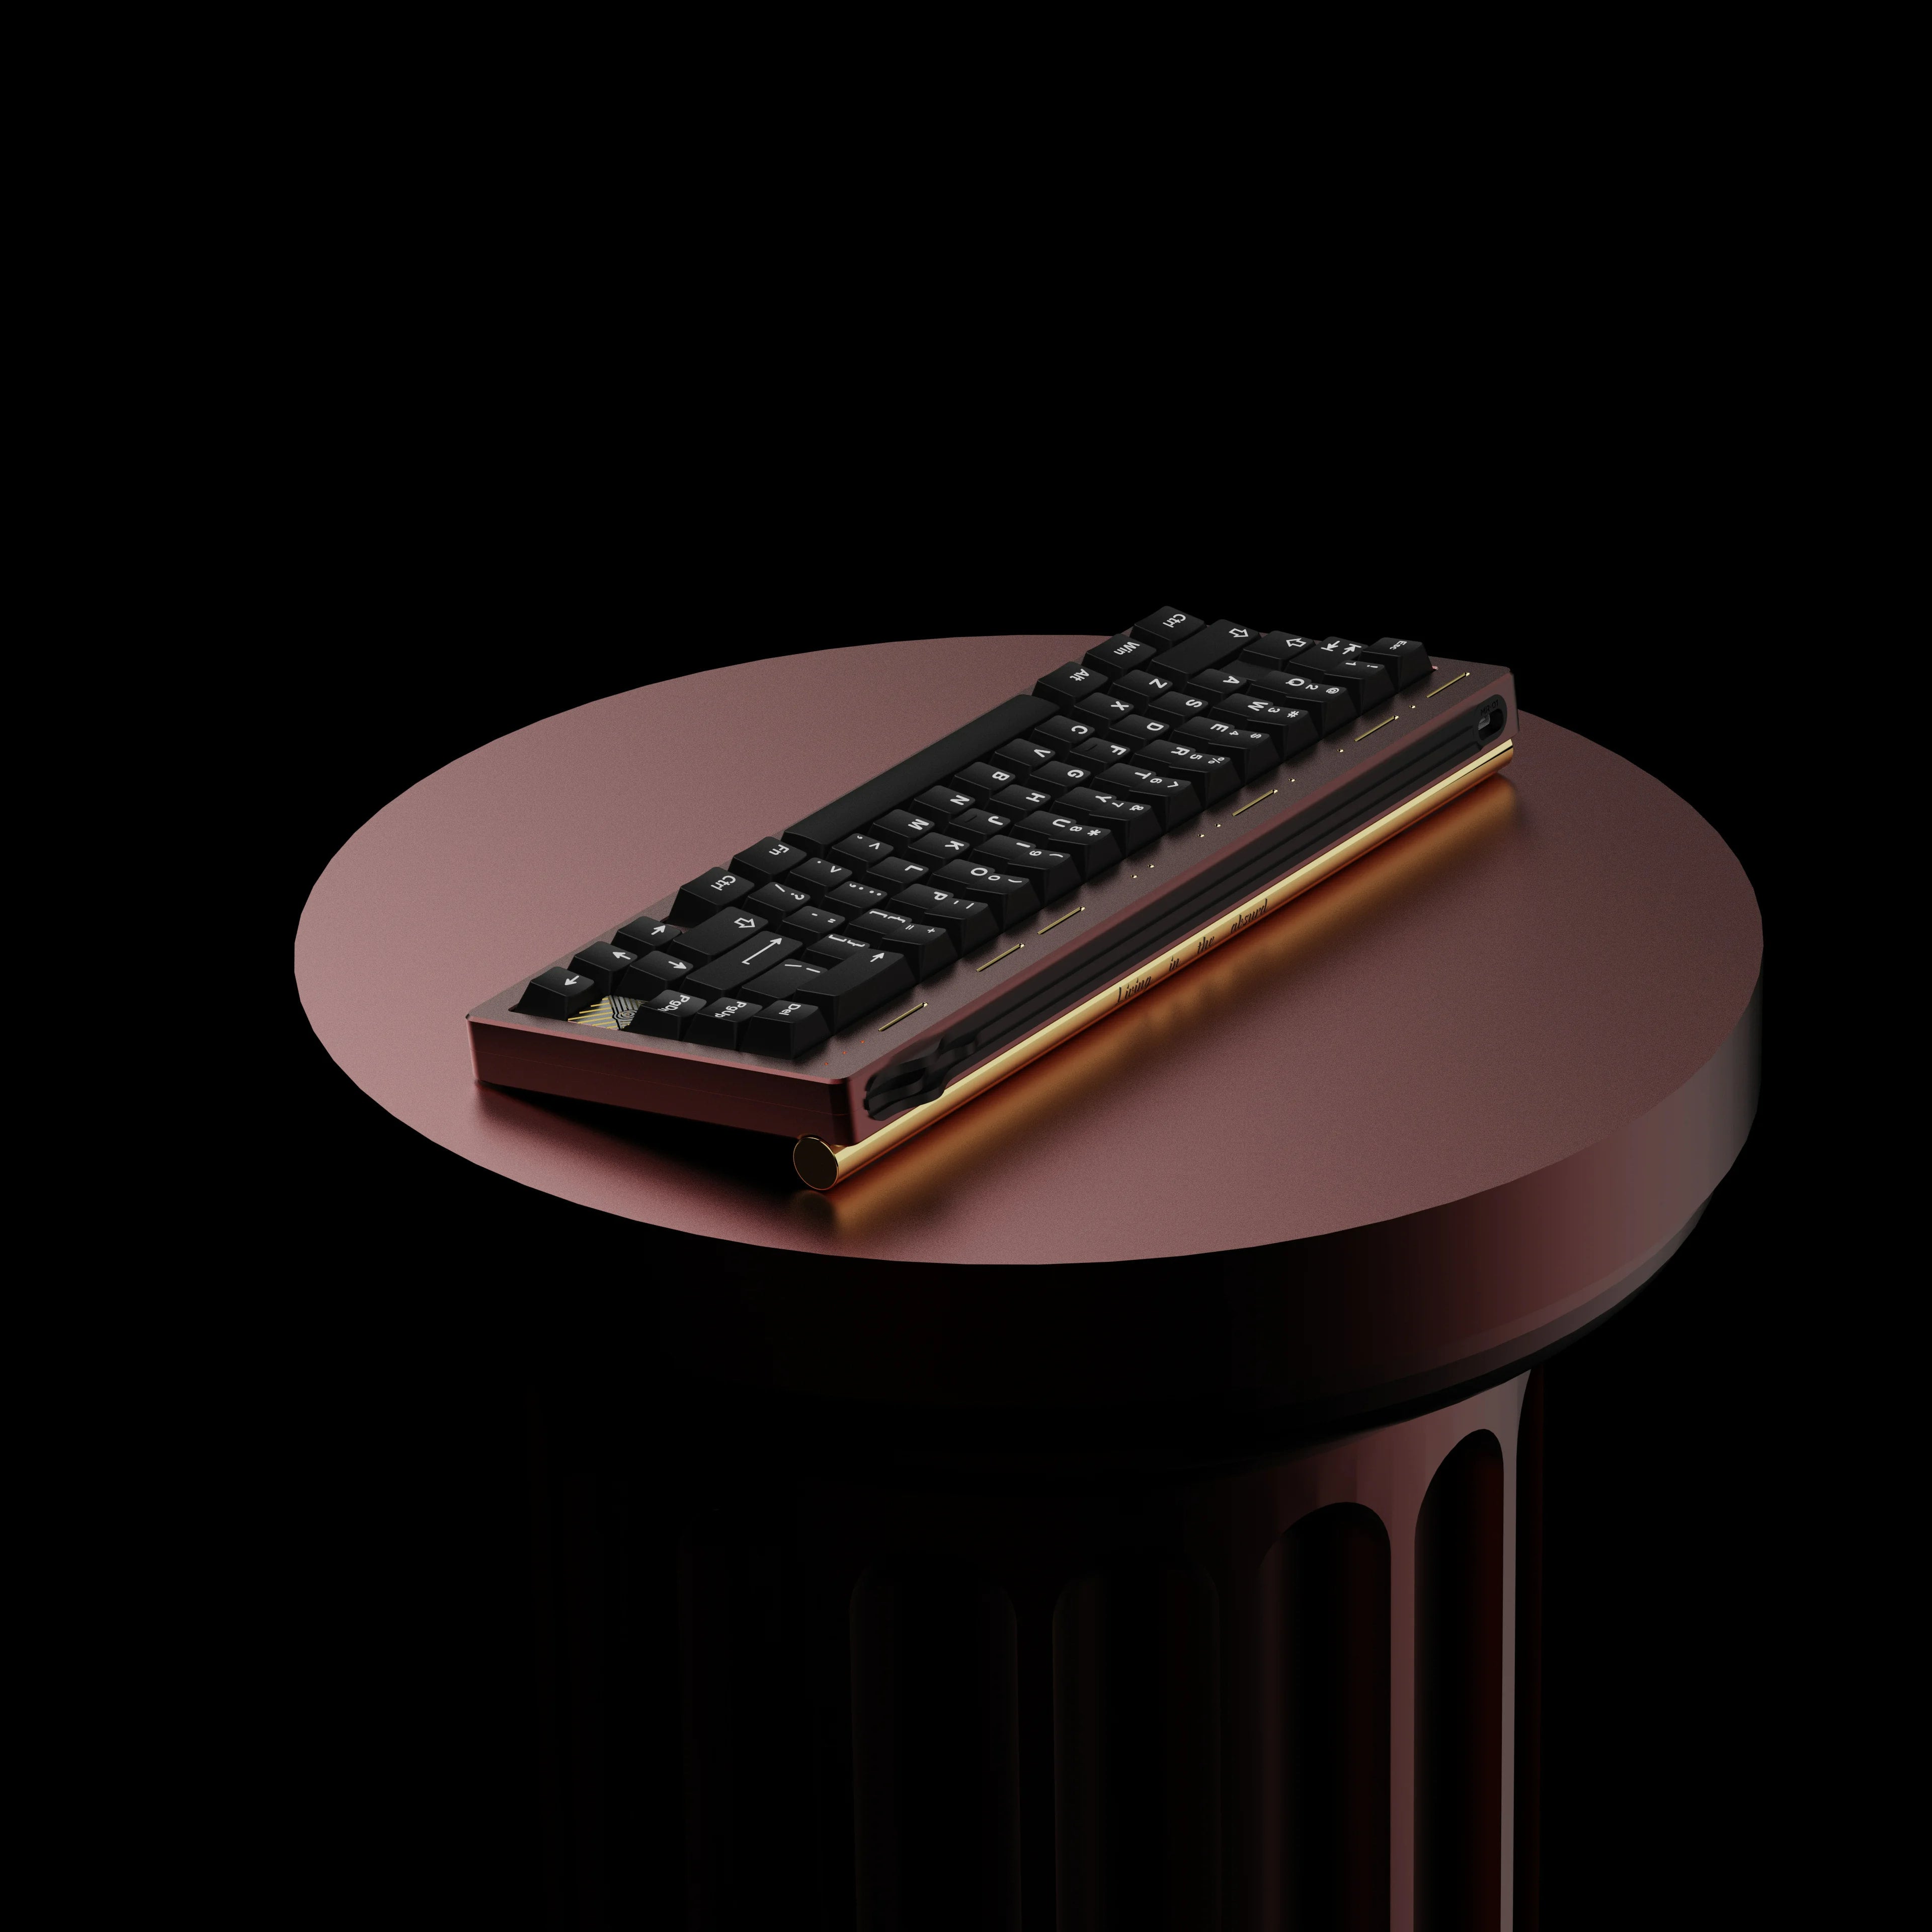 Sisyphus65 - Premium Mechnical Keyboard [Group Buy]